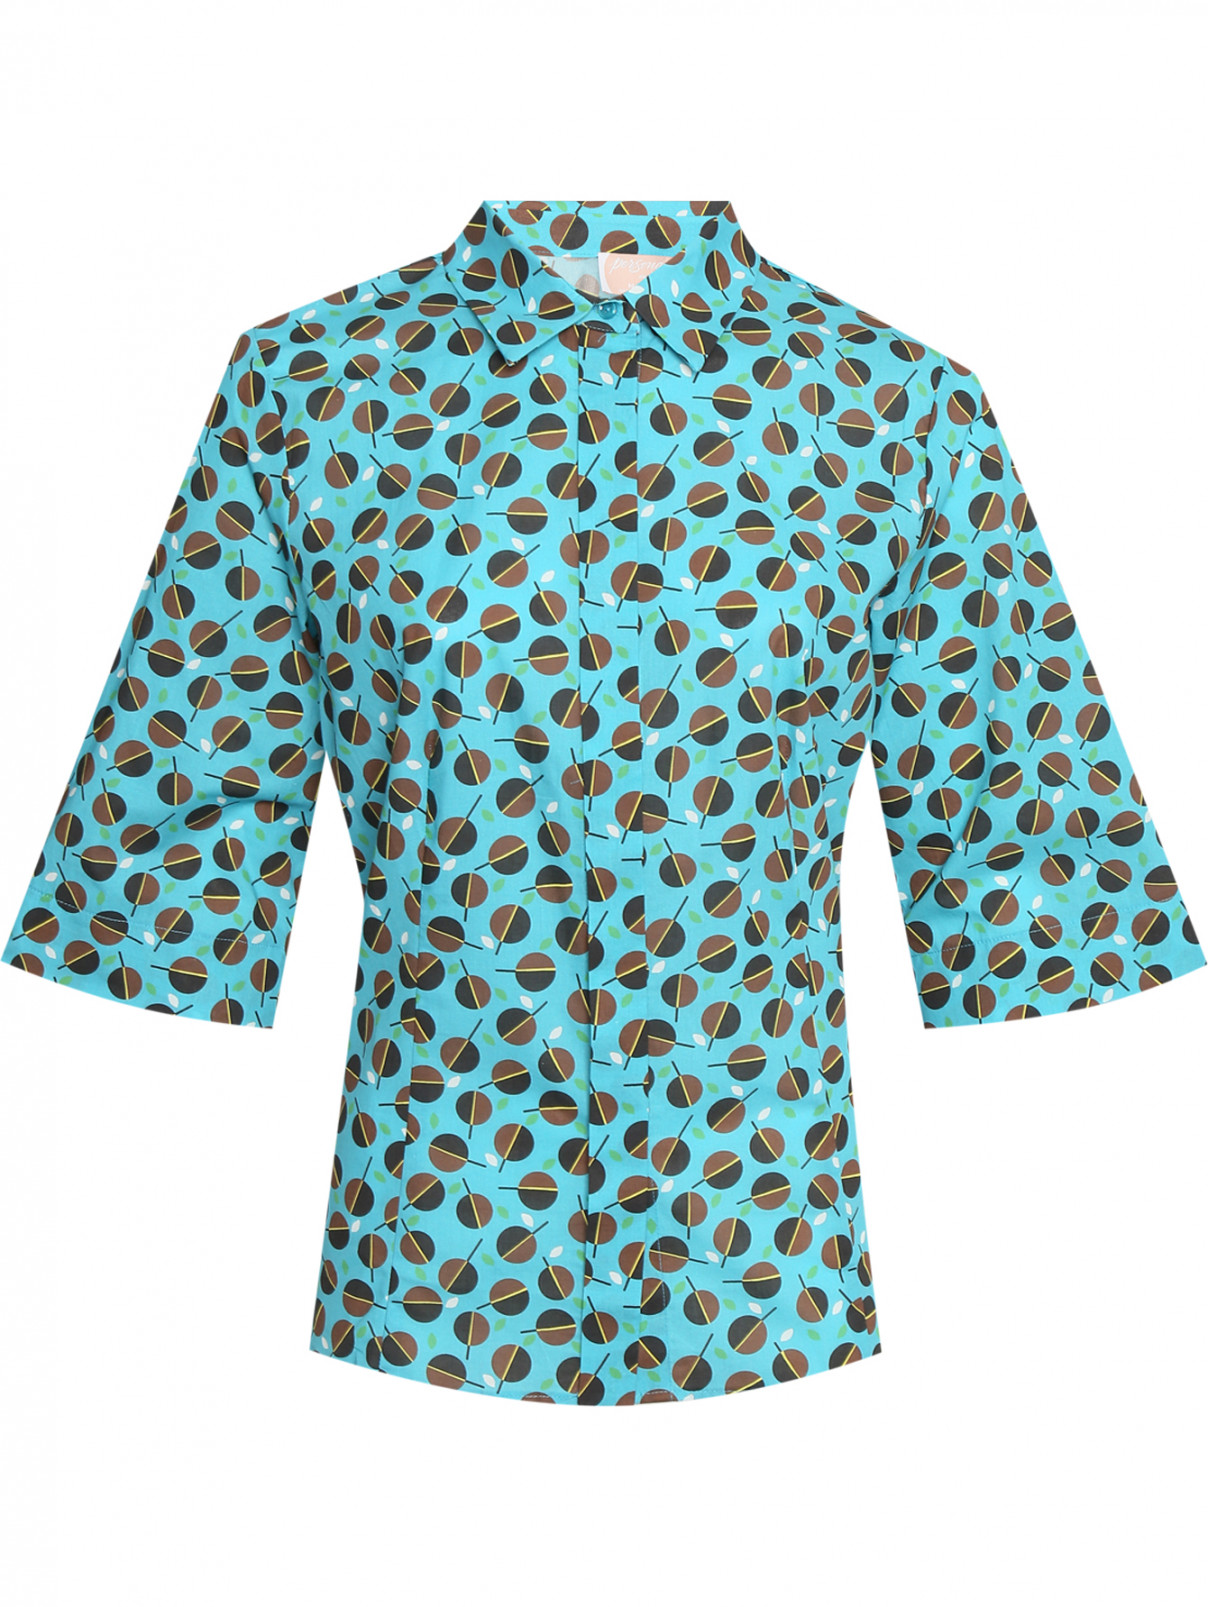 Блуза из хлопка с узором Persona by Marina Rinaldi  –  Общий вид  – Цвет:  Узор